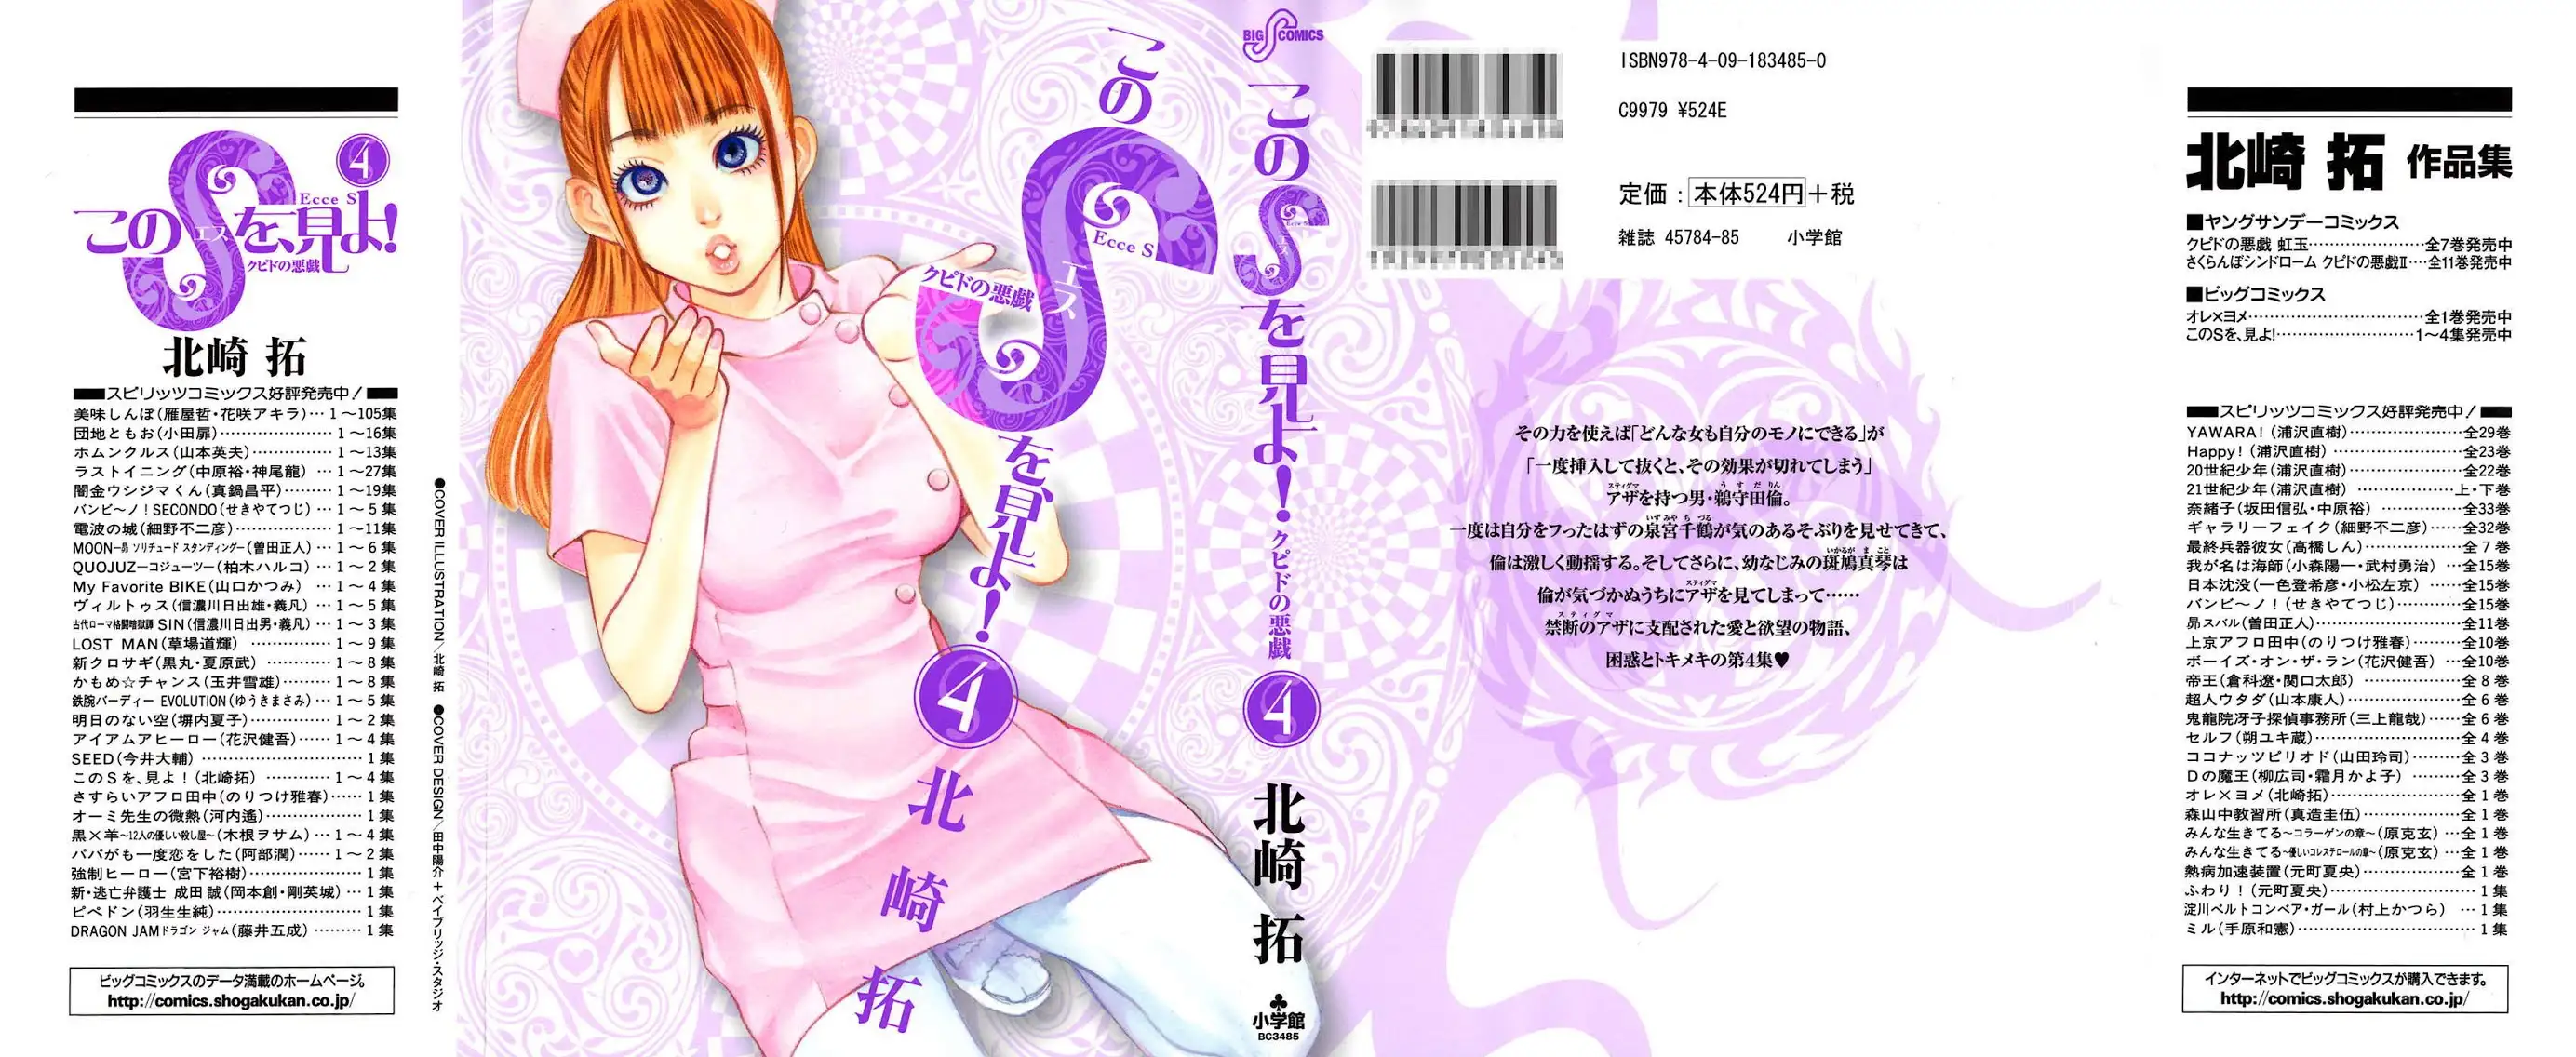 Kono S o, Mi yo! – Cupid no Itazura - Chapter 30 Page 1